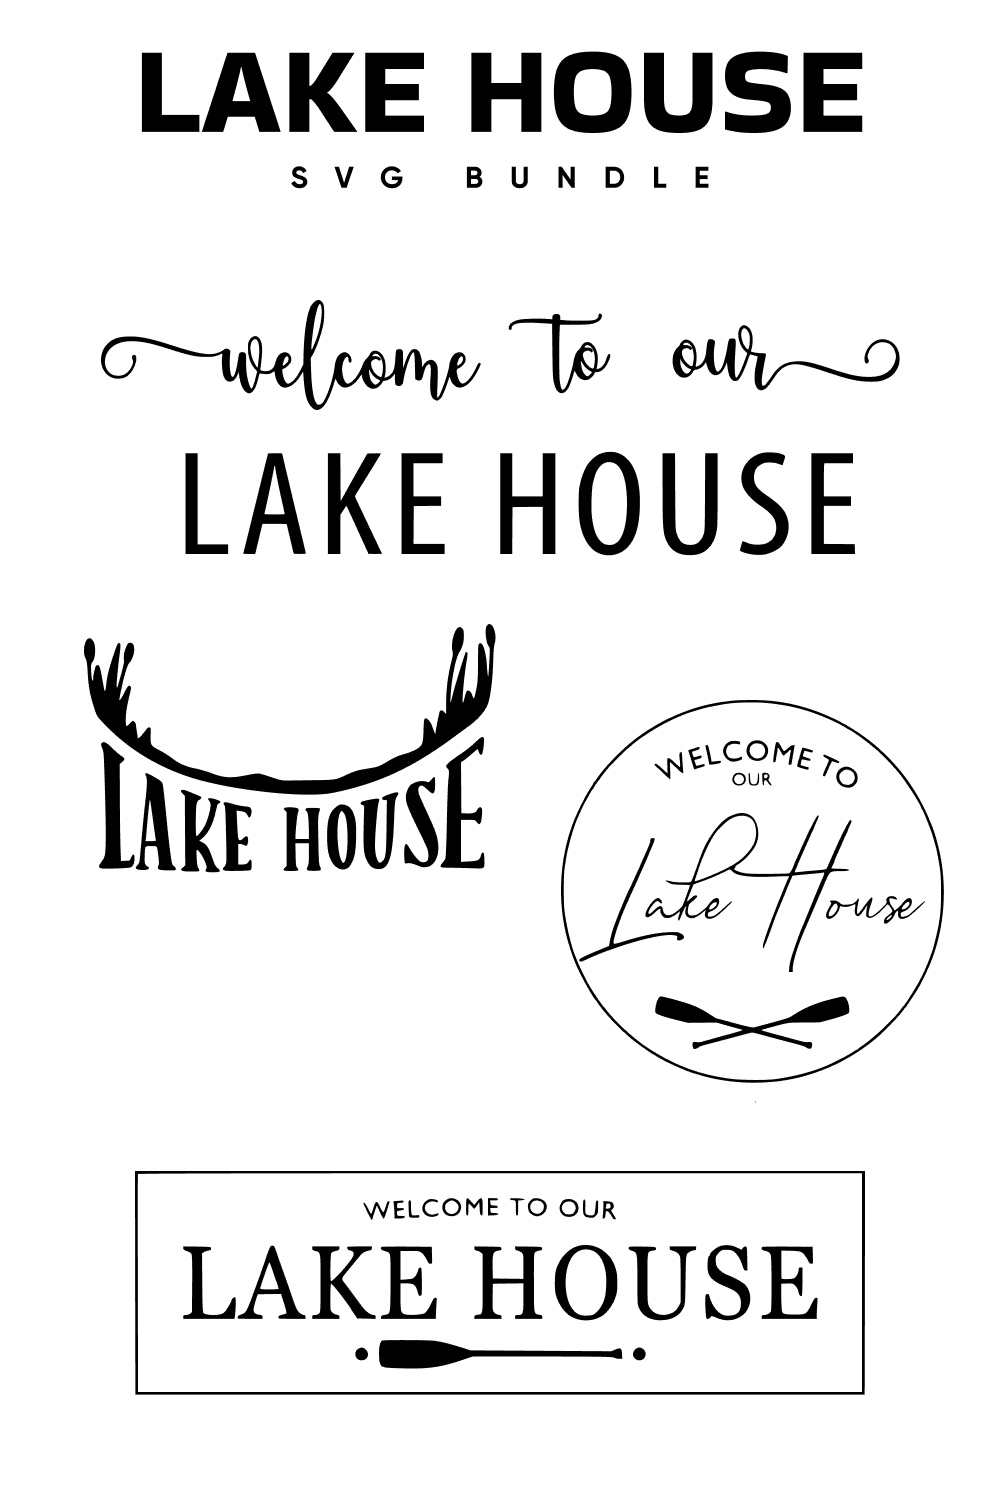 Lake House Svg - Pinterest.